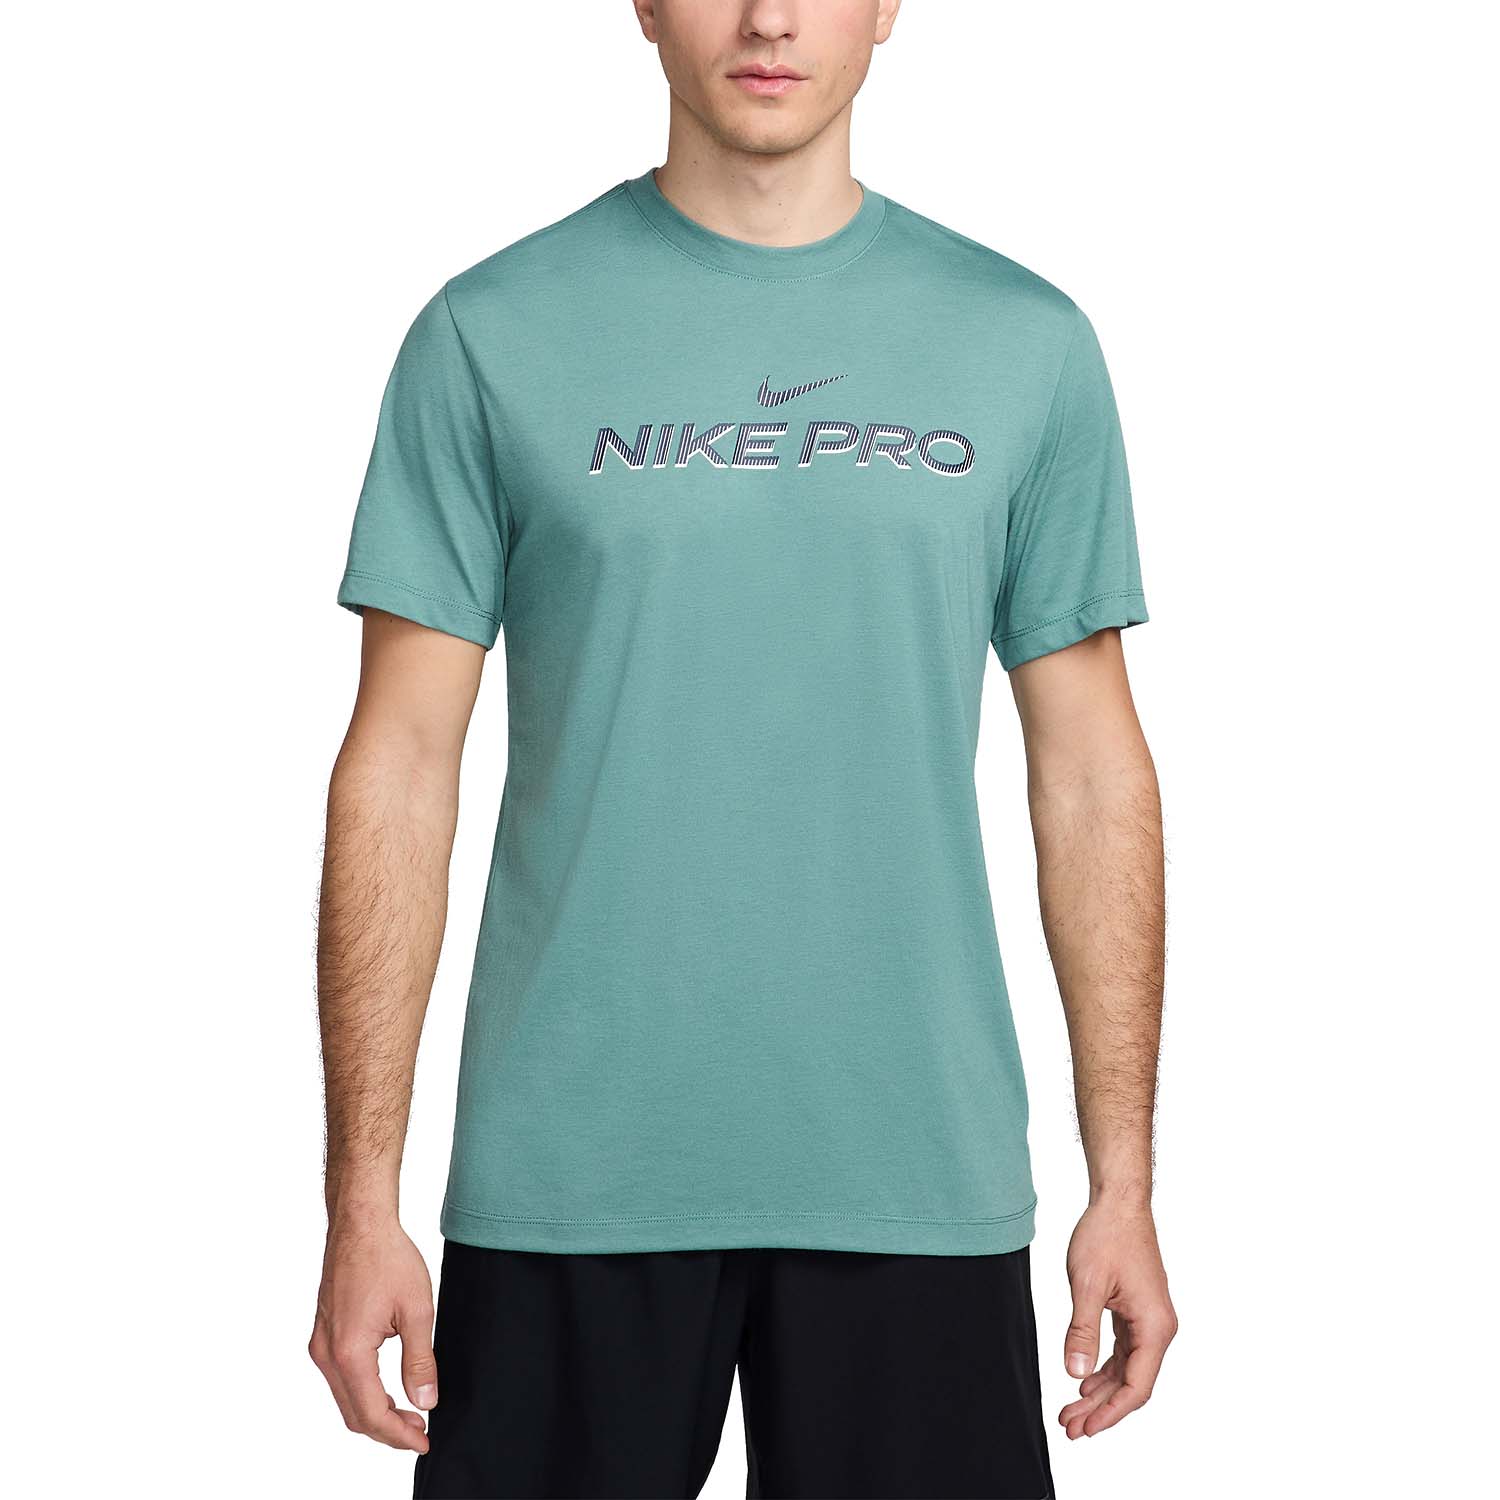 Nike Pro Fitness T-Shirt - Bicoastal